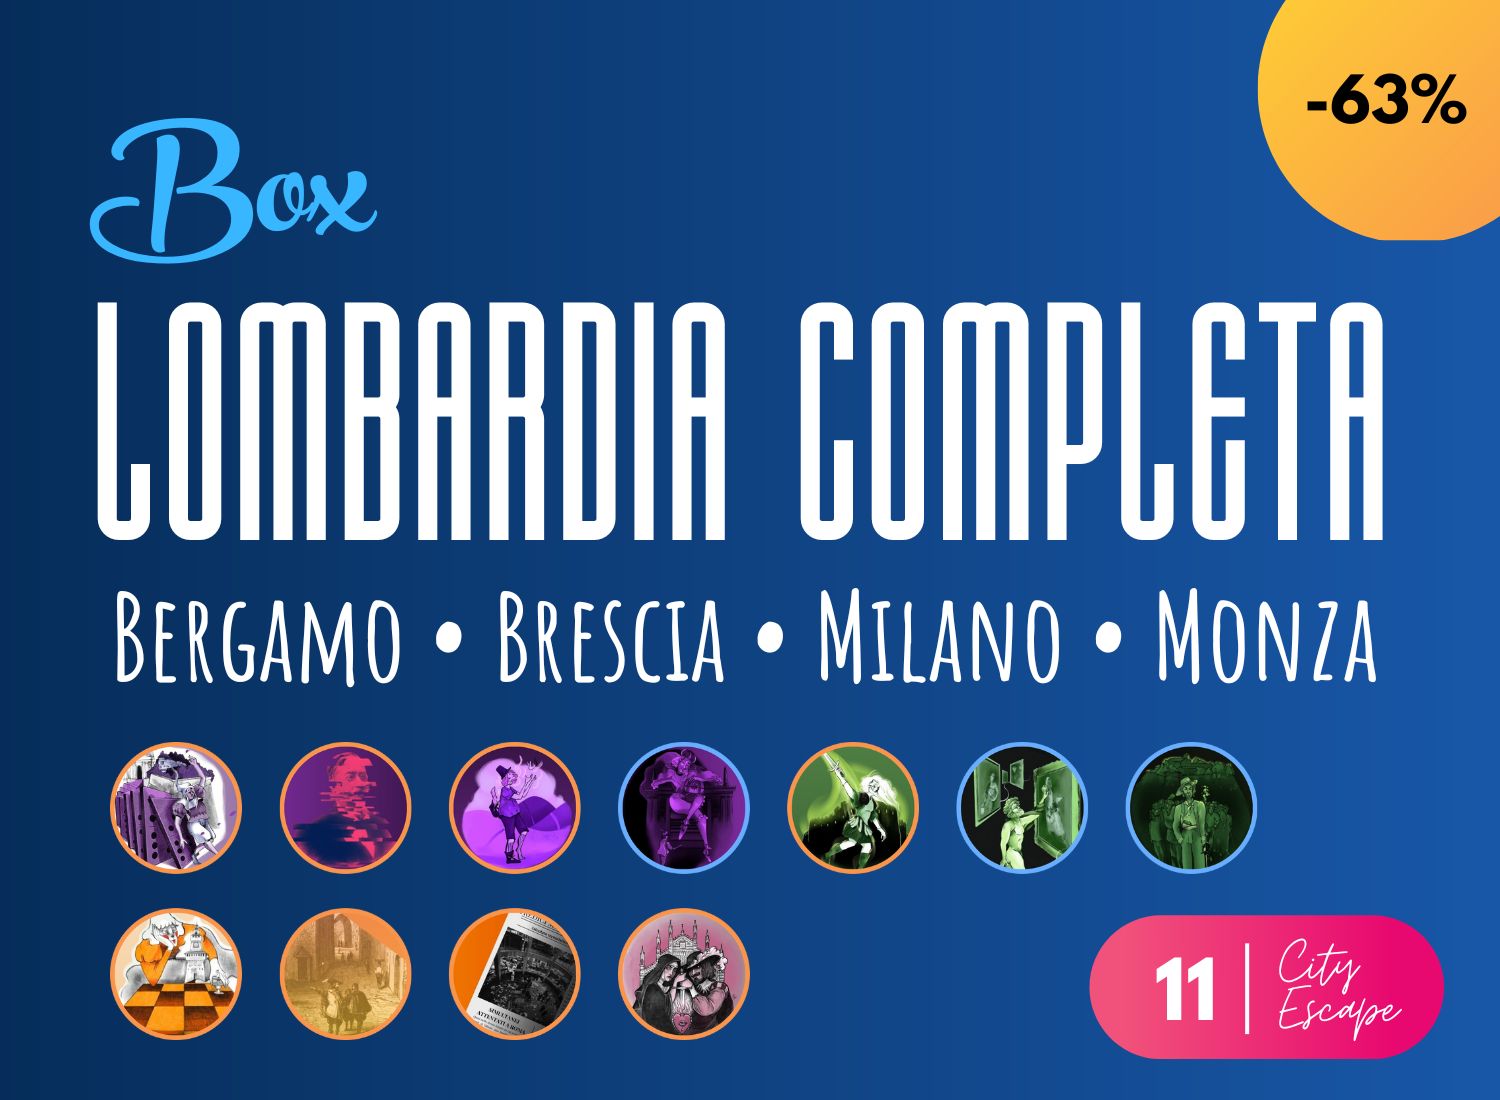 BOX Lombardia Completa